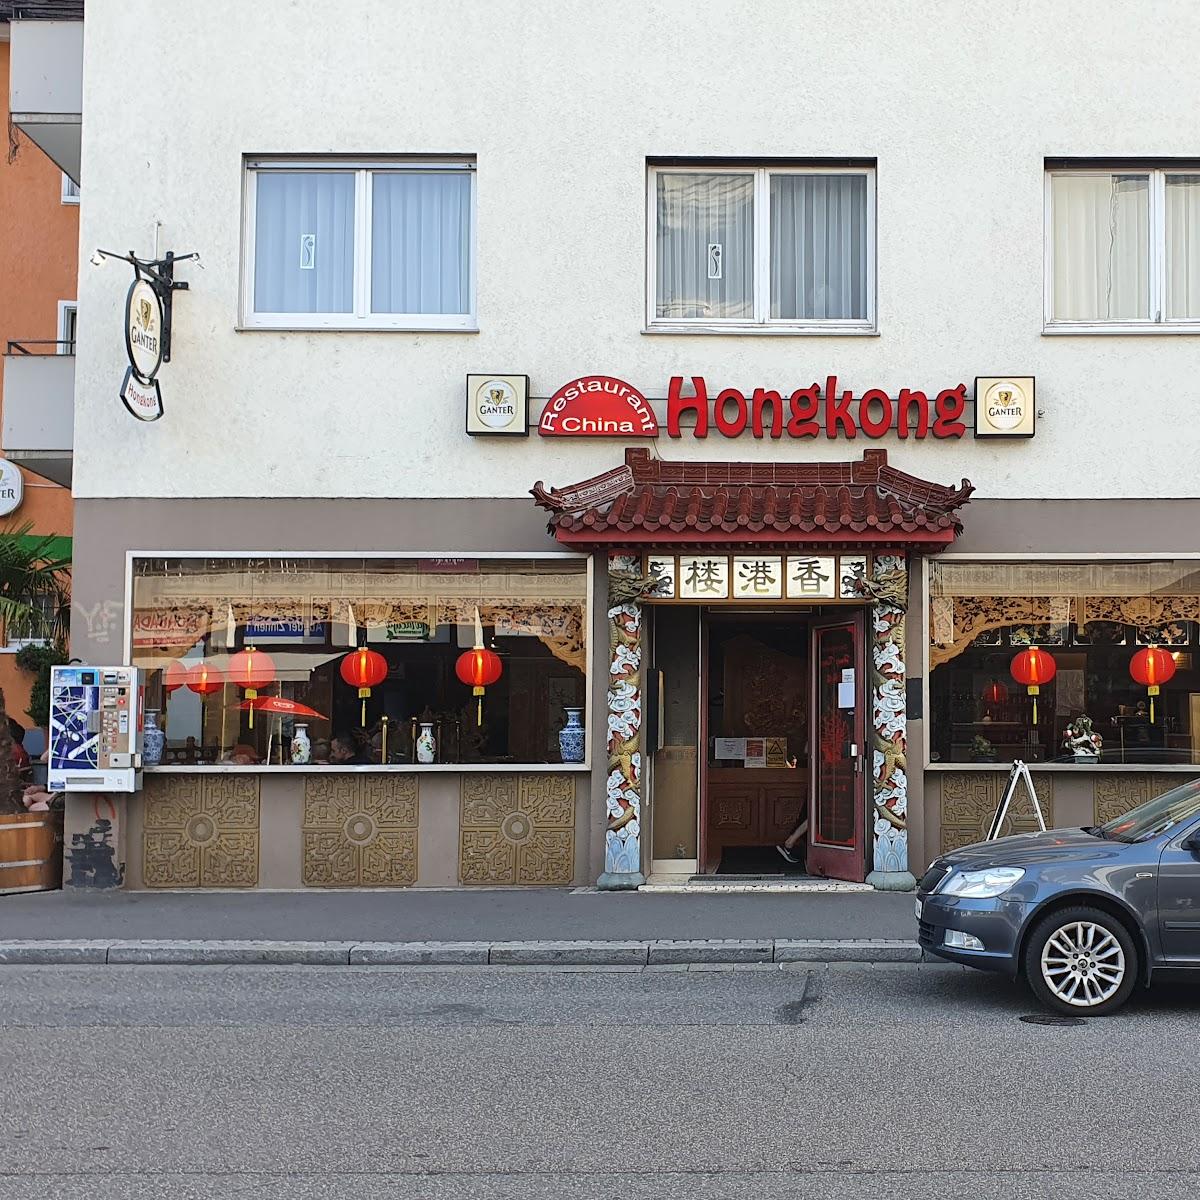 Restaurant "Hongkong" in Freiburg im Breisgau